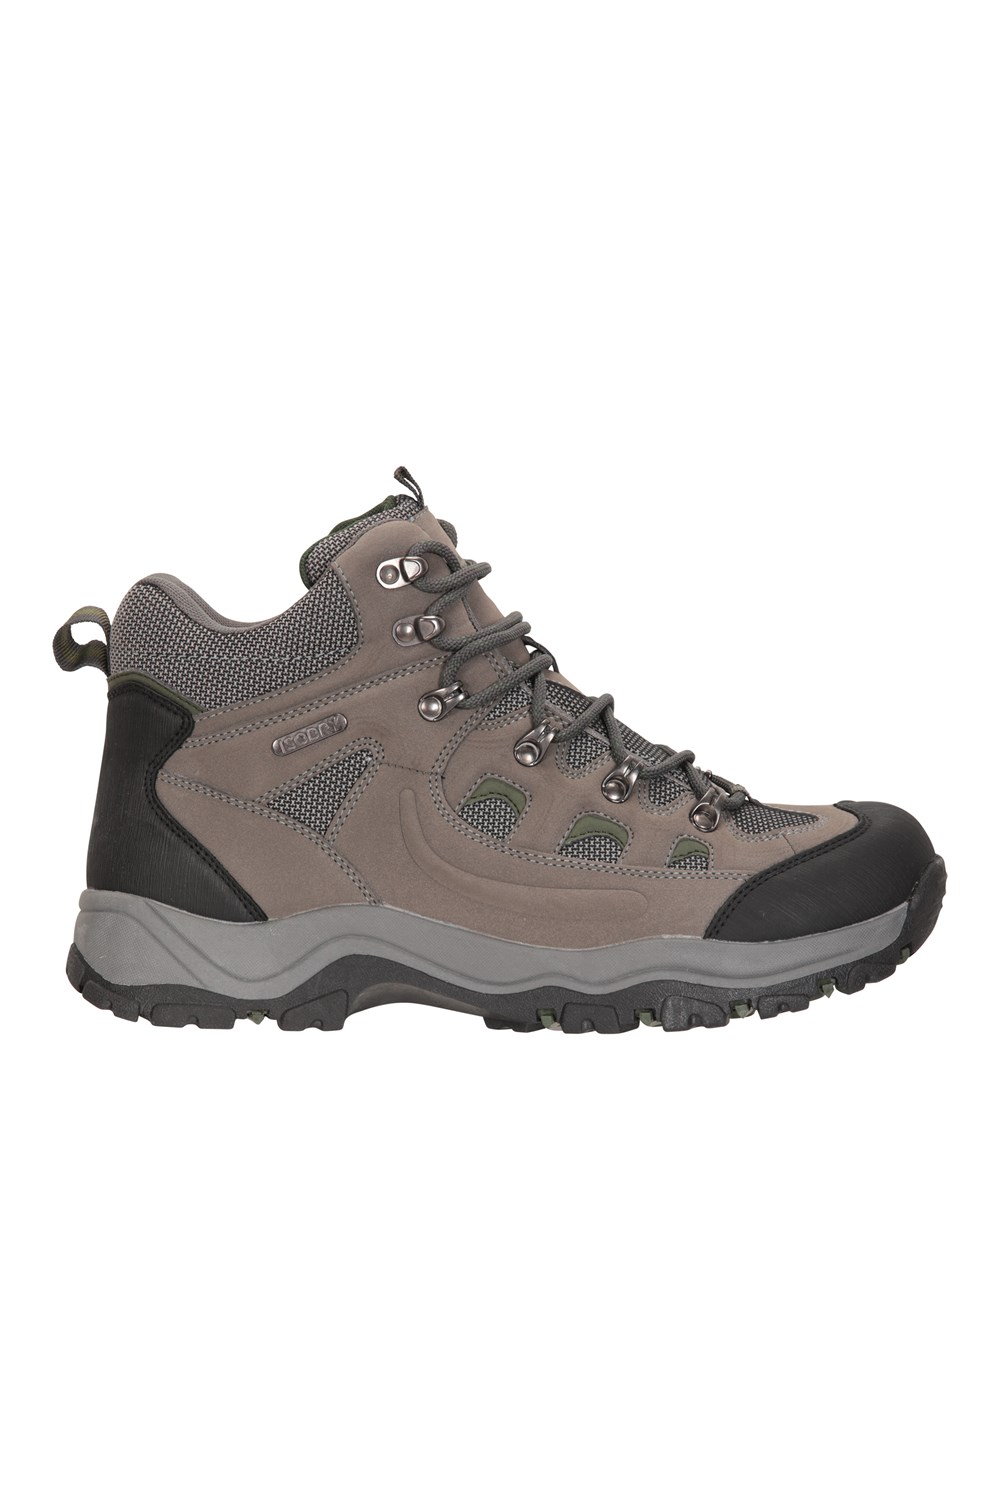 Mountain Warehouse Mens Waterproof Hiking Boots Walking Trekking ...